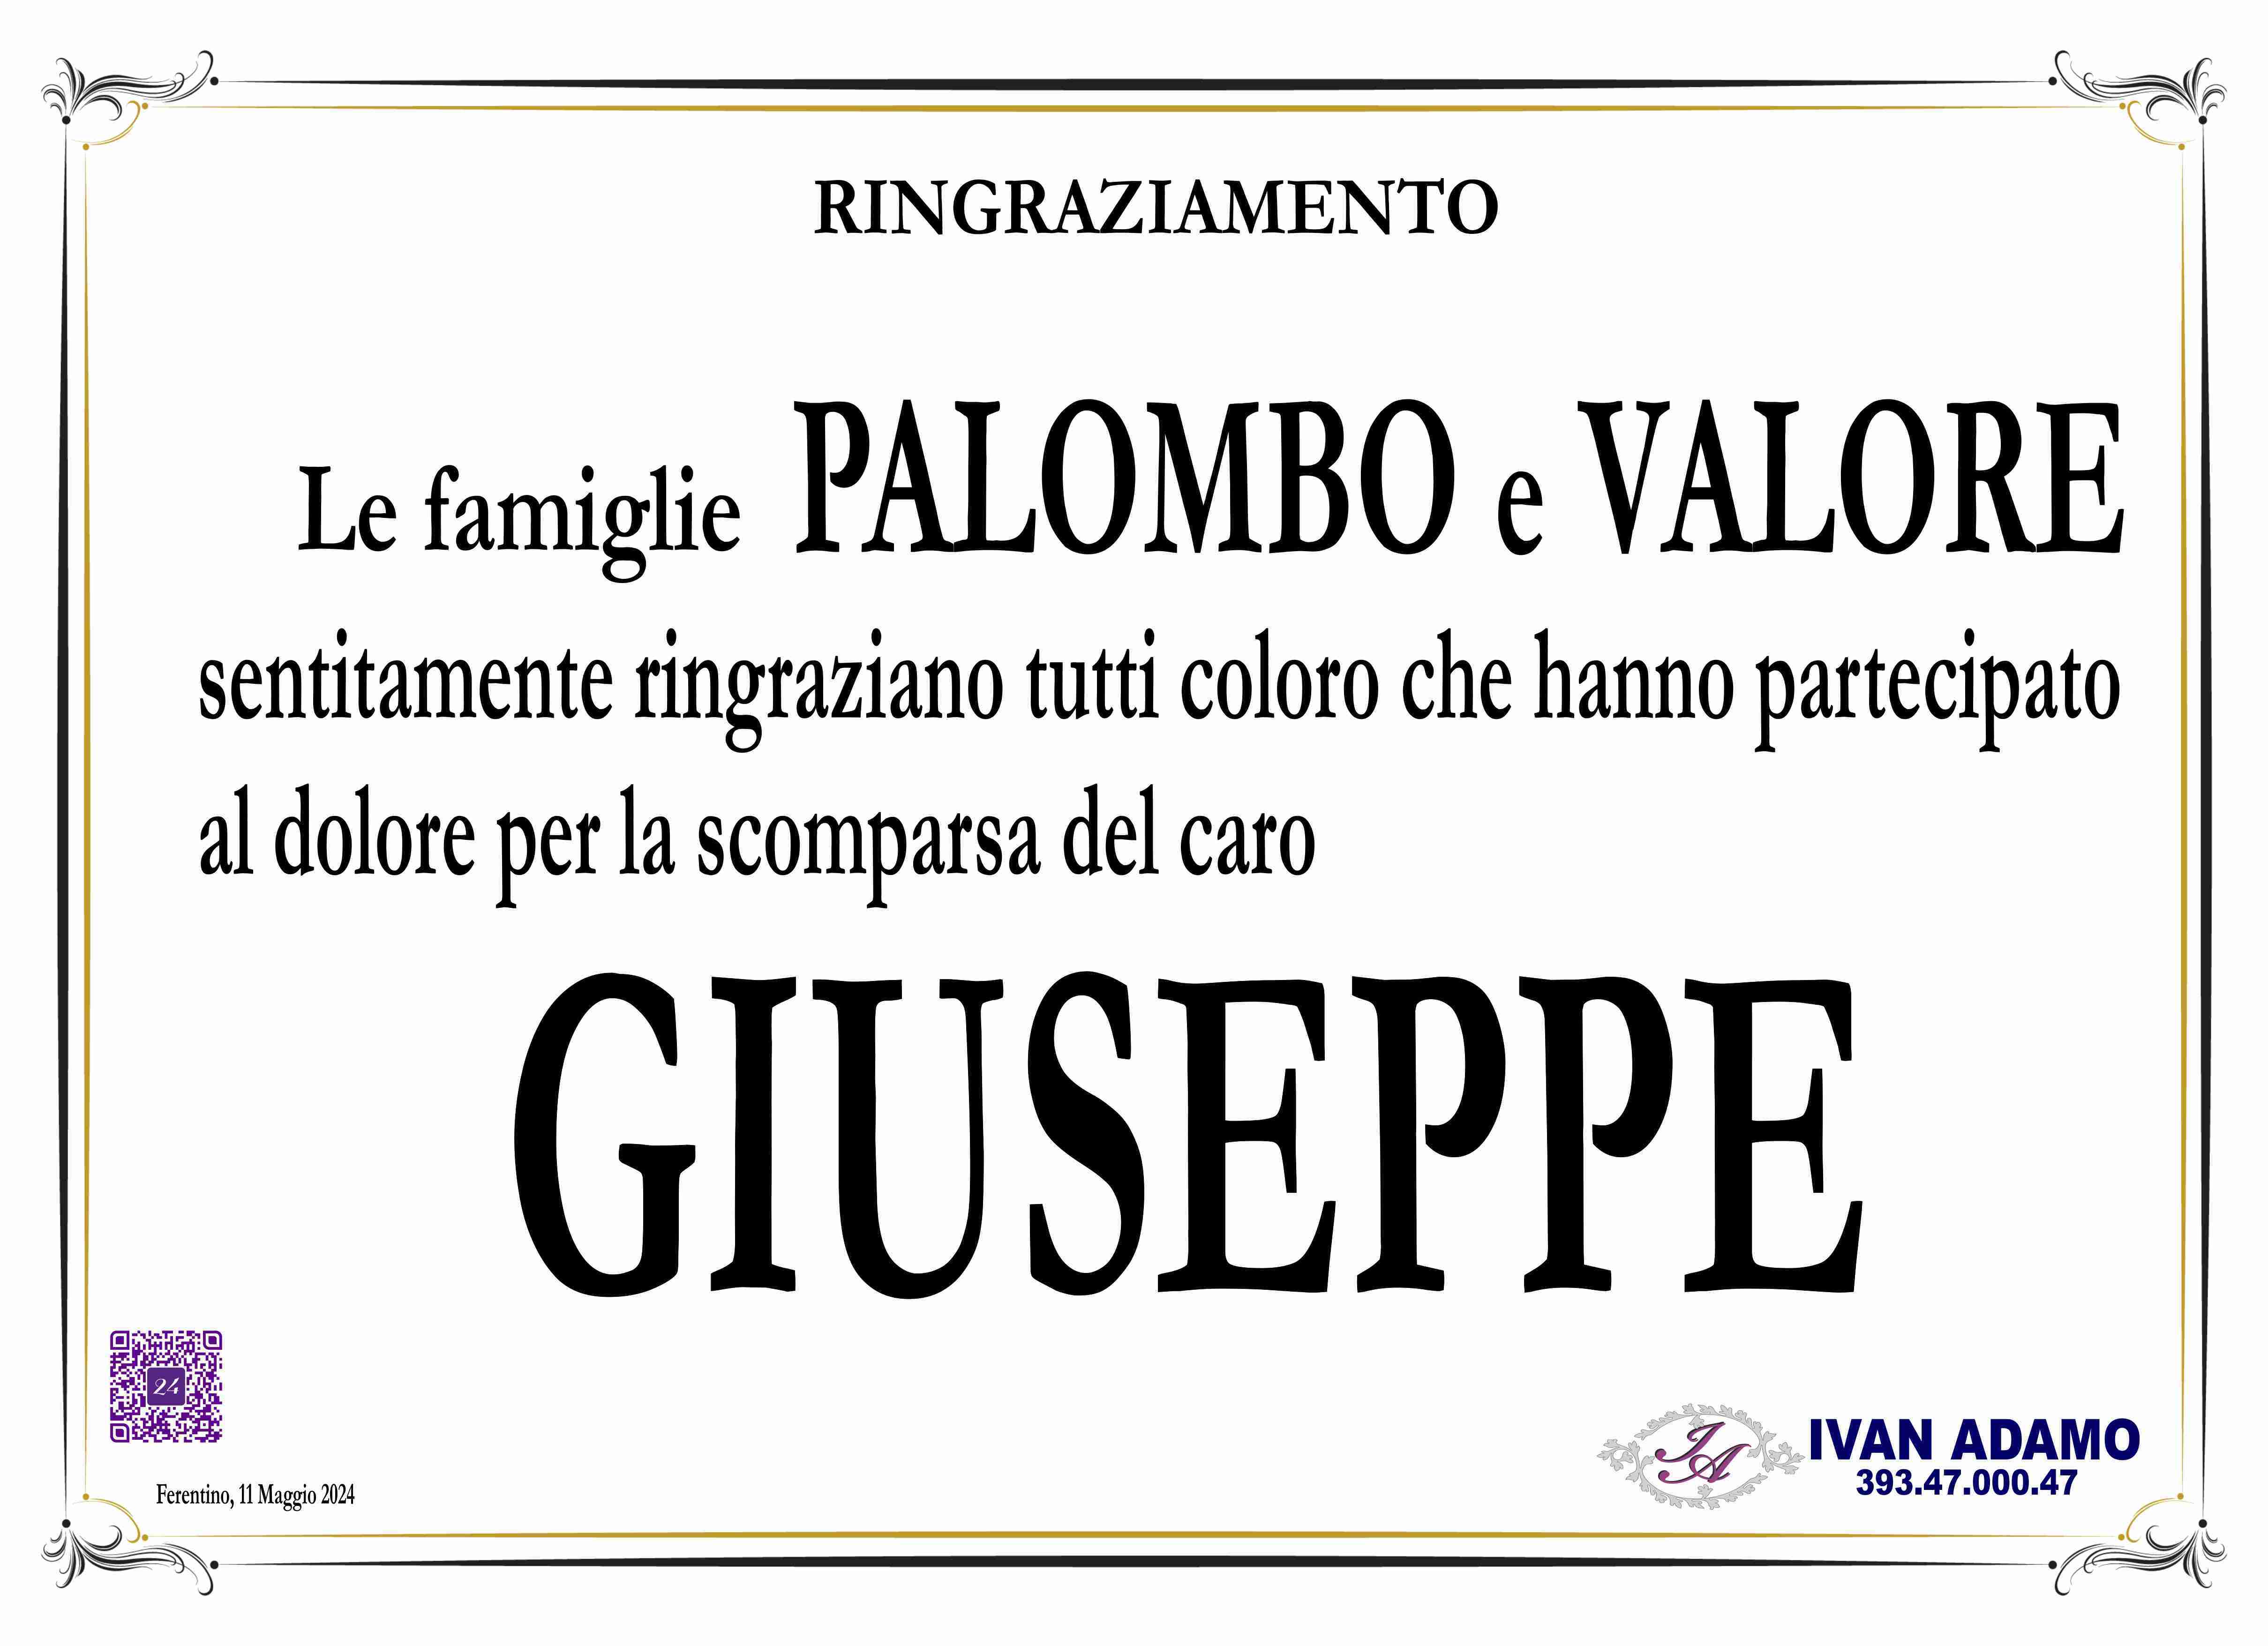 Giuseppe Palombo